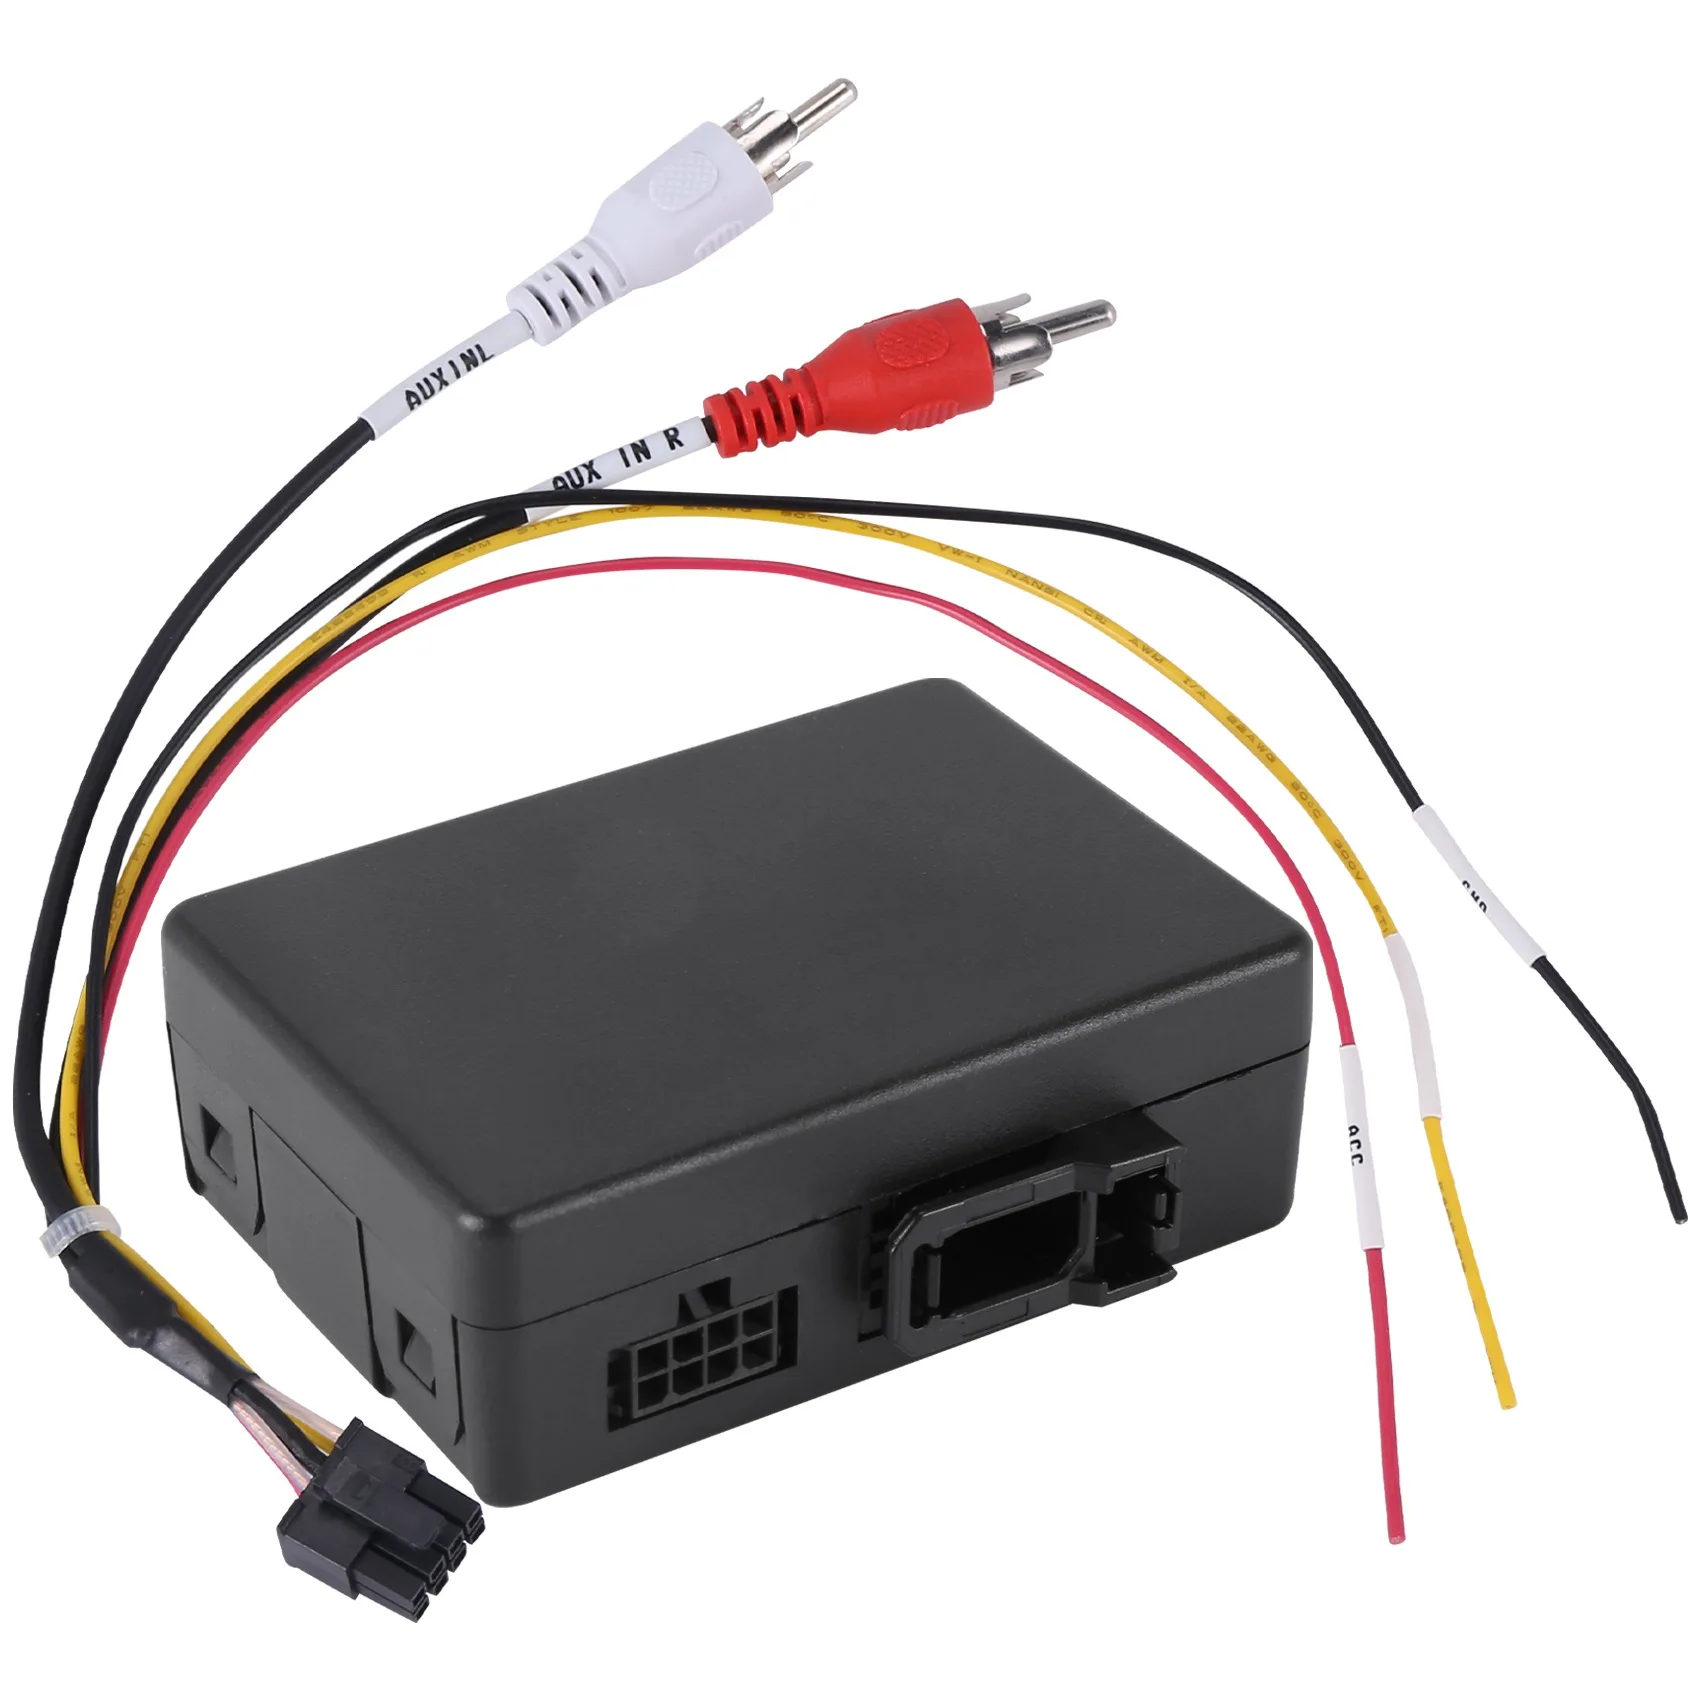 

For Cayenne for Mercedes Benz/ML/GLR/W164/W251 AUX Car Optical Fiber Decoder Box Amplifier Adapter